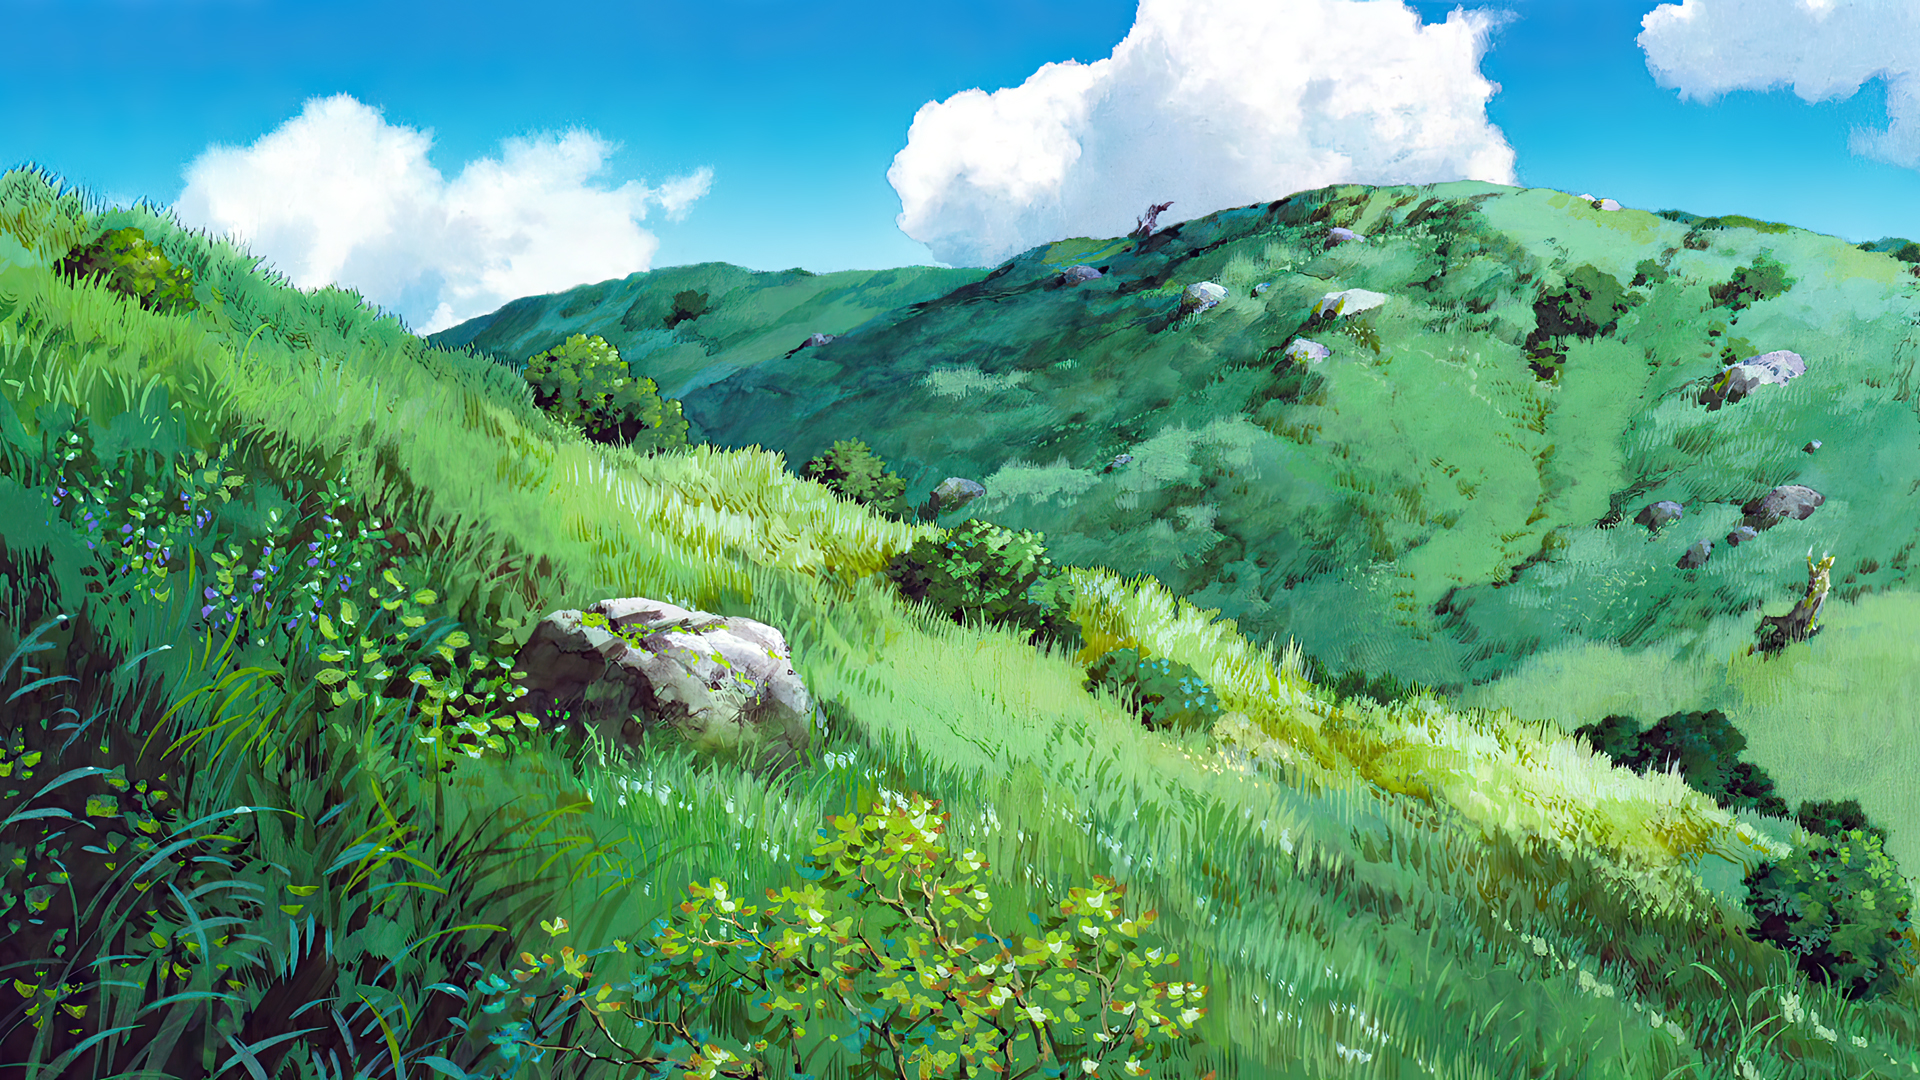 Anime 1920x1080 Princess Mononoke animated movies anime animation film stills Studio Ghibli Hayao Miyazaki field mountains flowers grass nature hills sky clouds bushes rocks